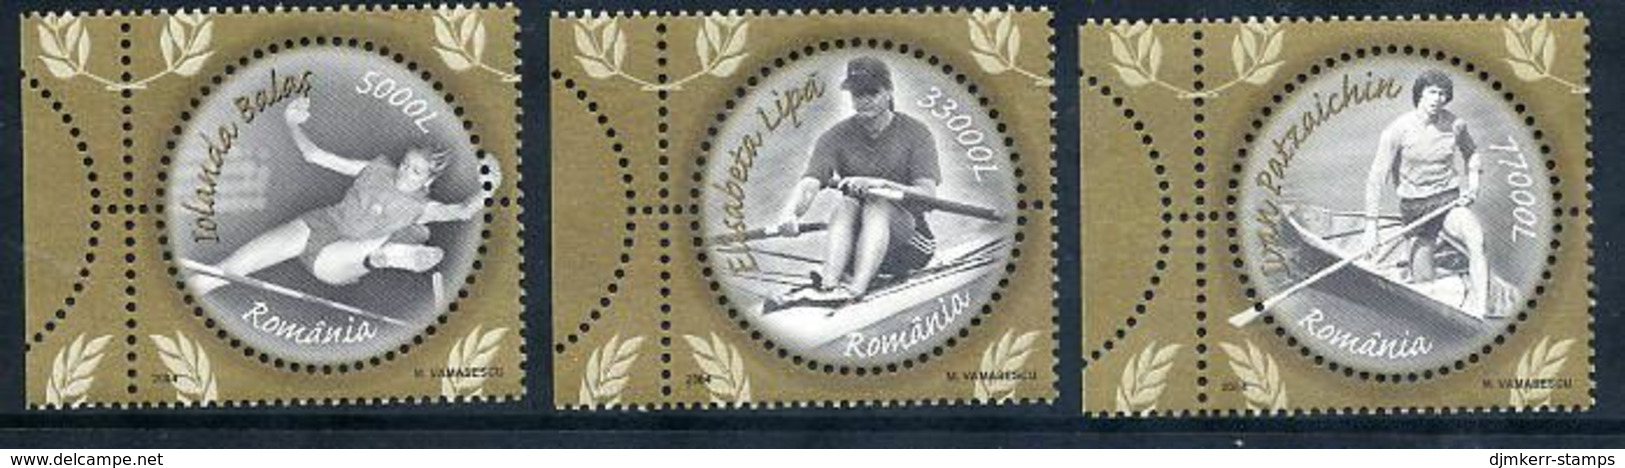 ROMANIA 2004 Sports Personalities.  Michel 5889-91 - Unused Stamps